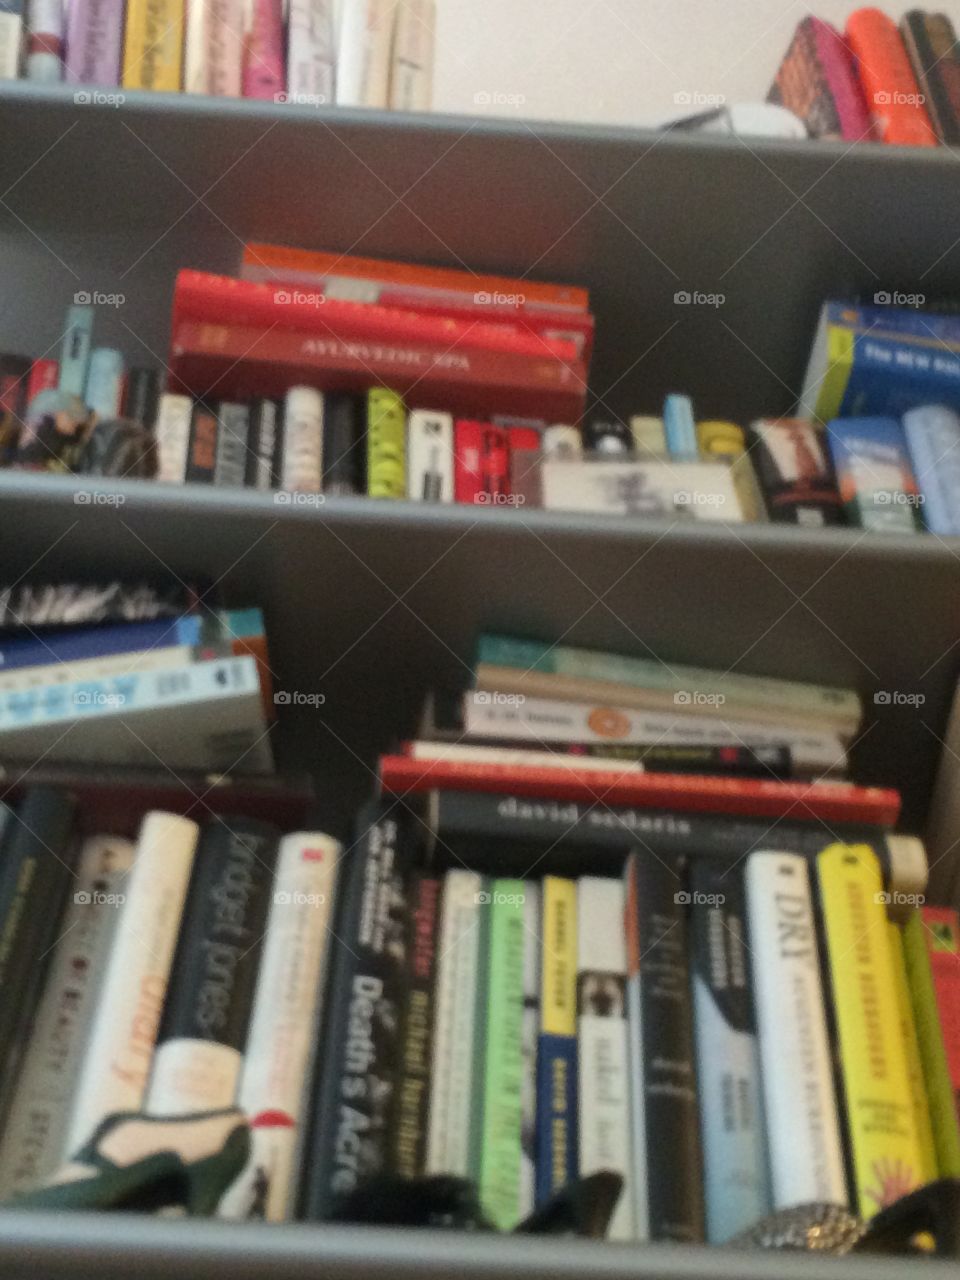 Book shelfie